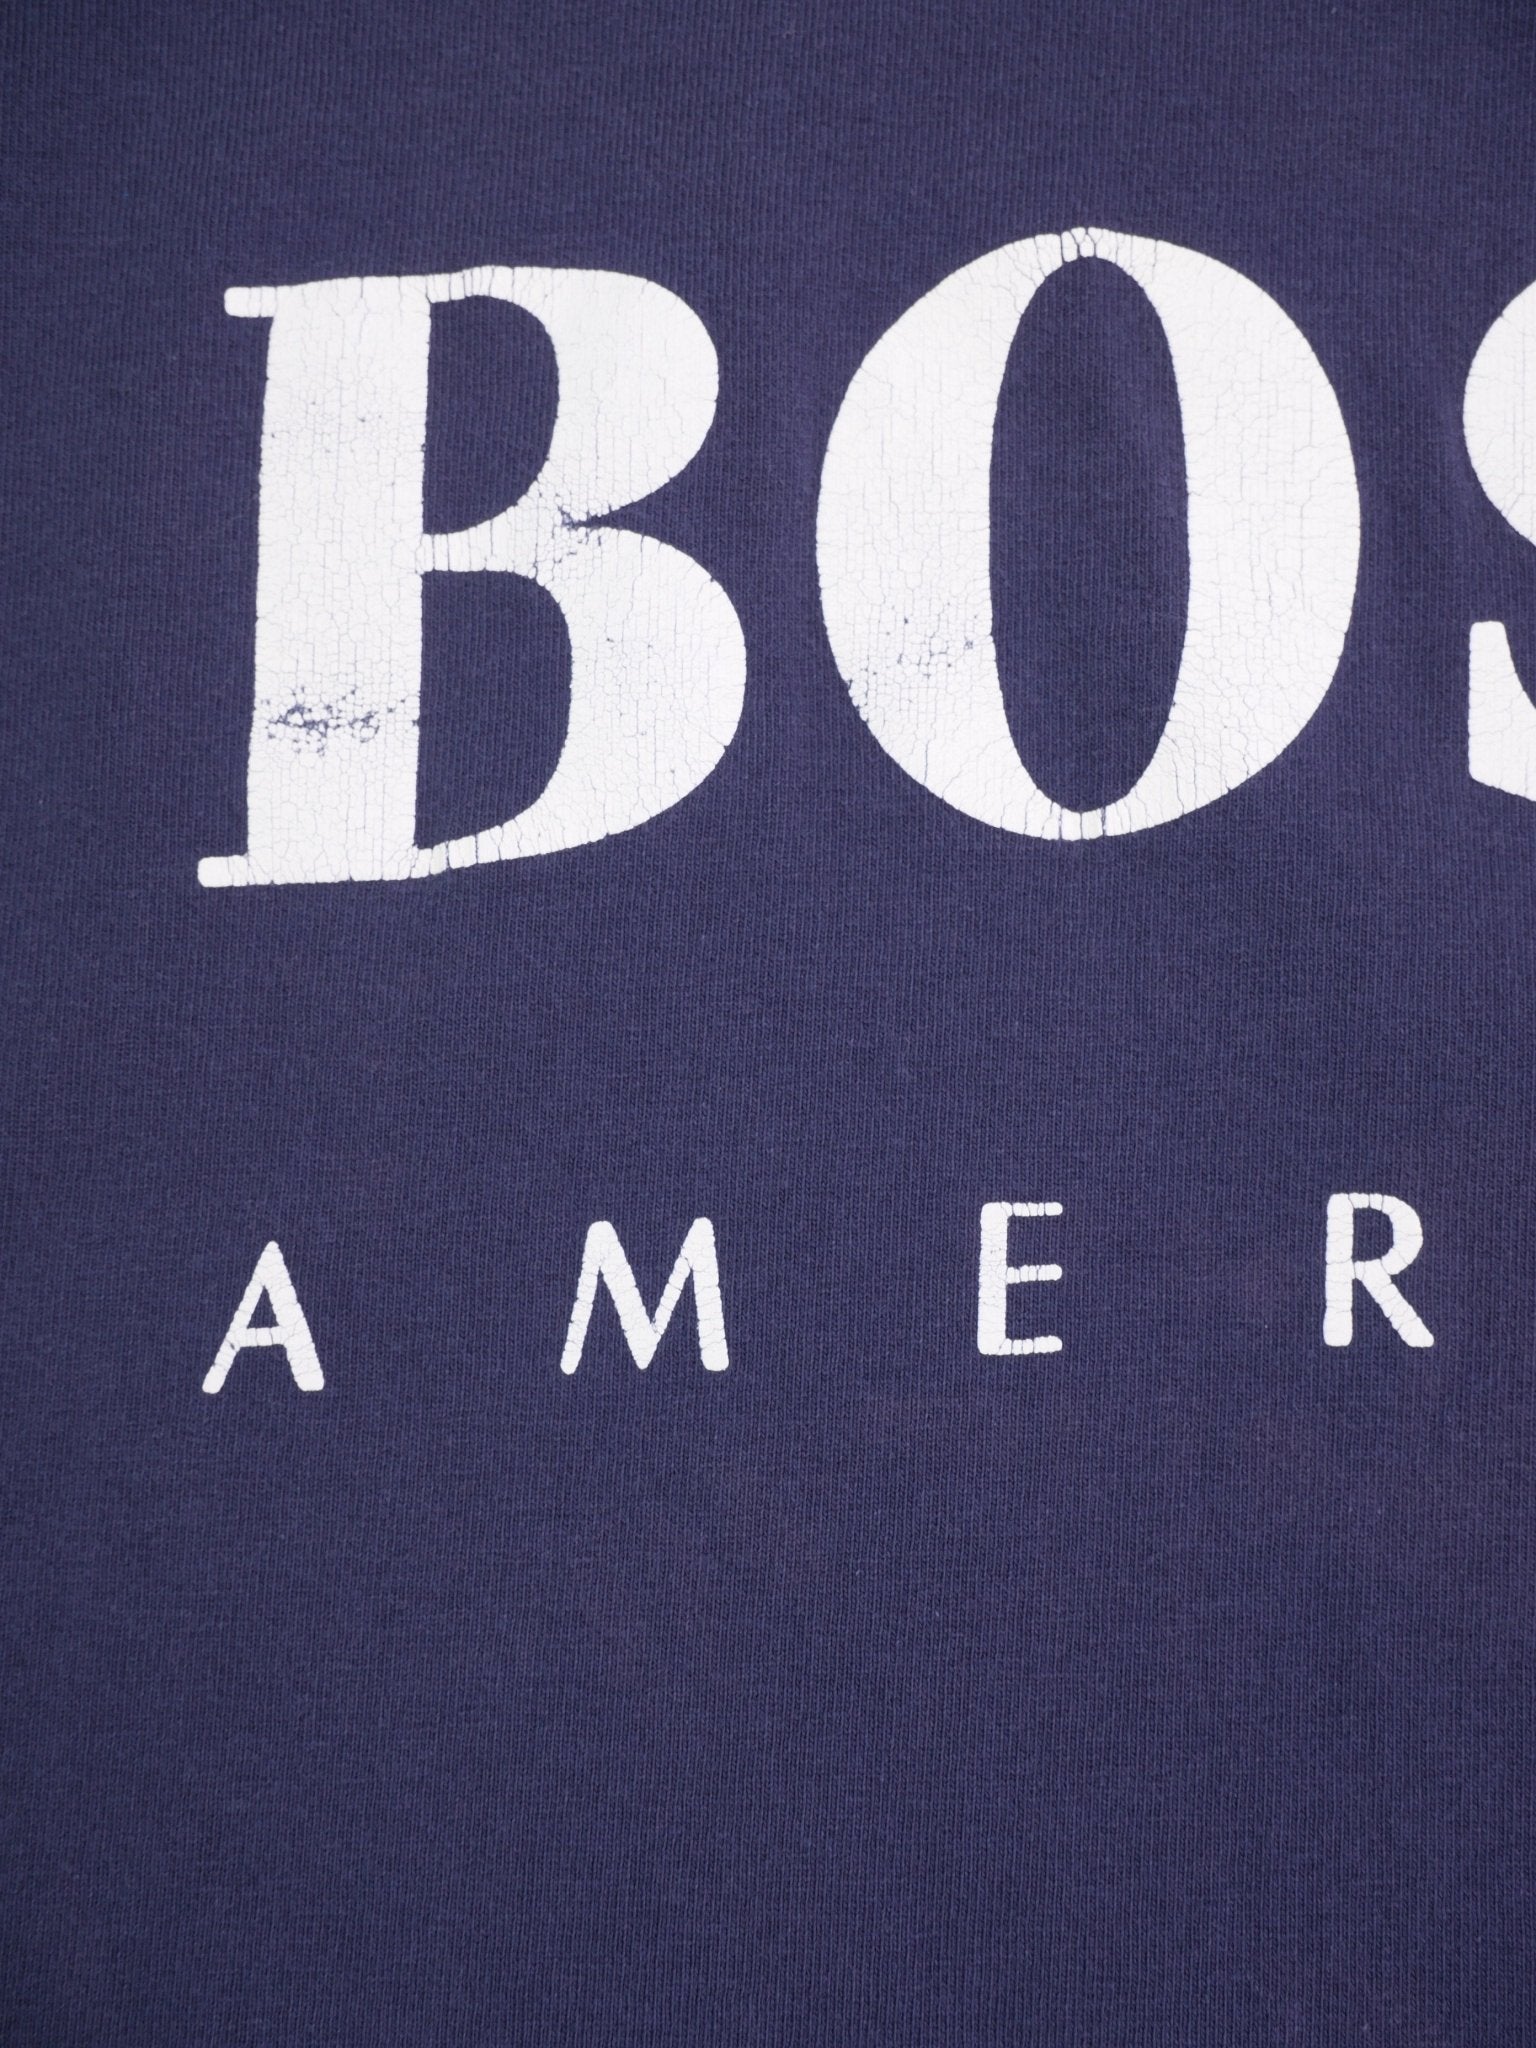 Hugo Boss printed Spellout navy Shirt - Peeces